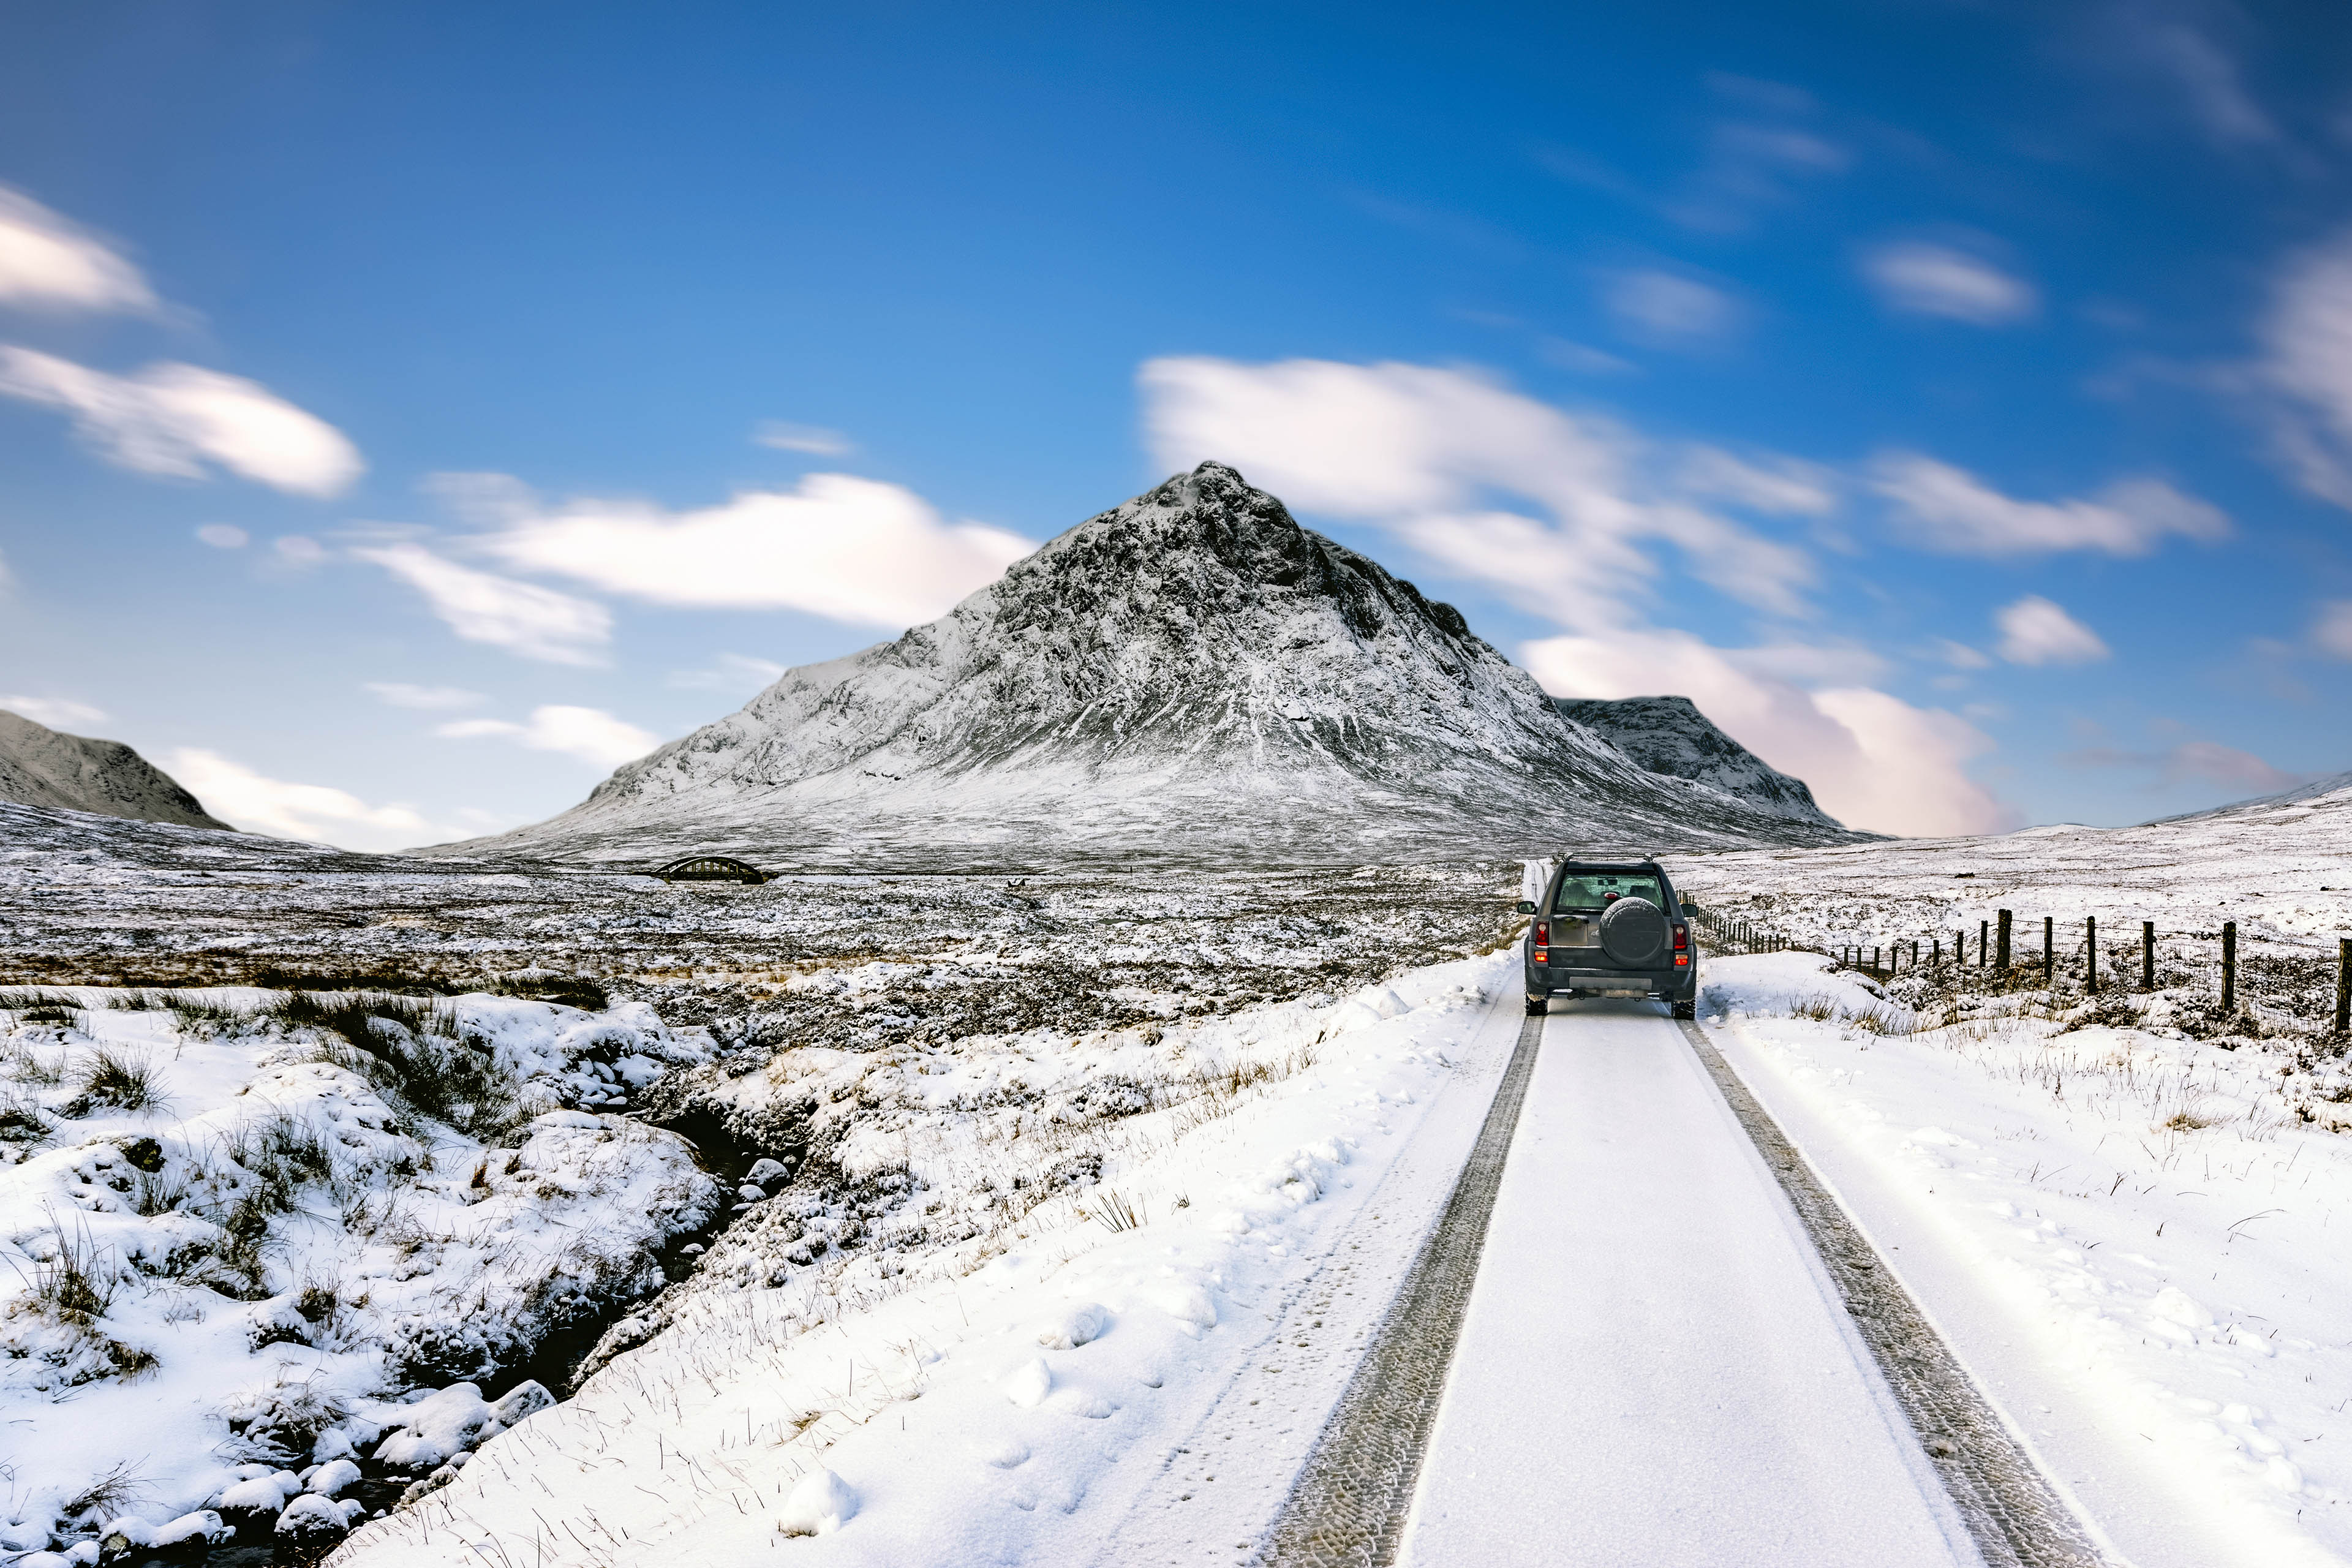 
            Automóvil transitando por camino nevado cerca de montañas
        